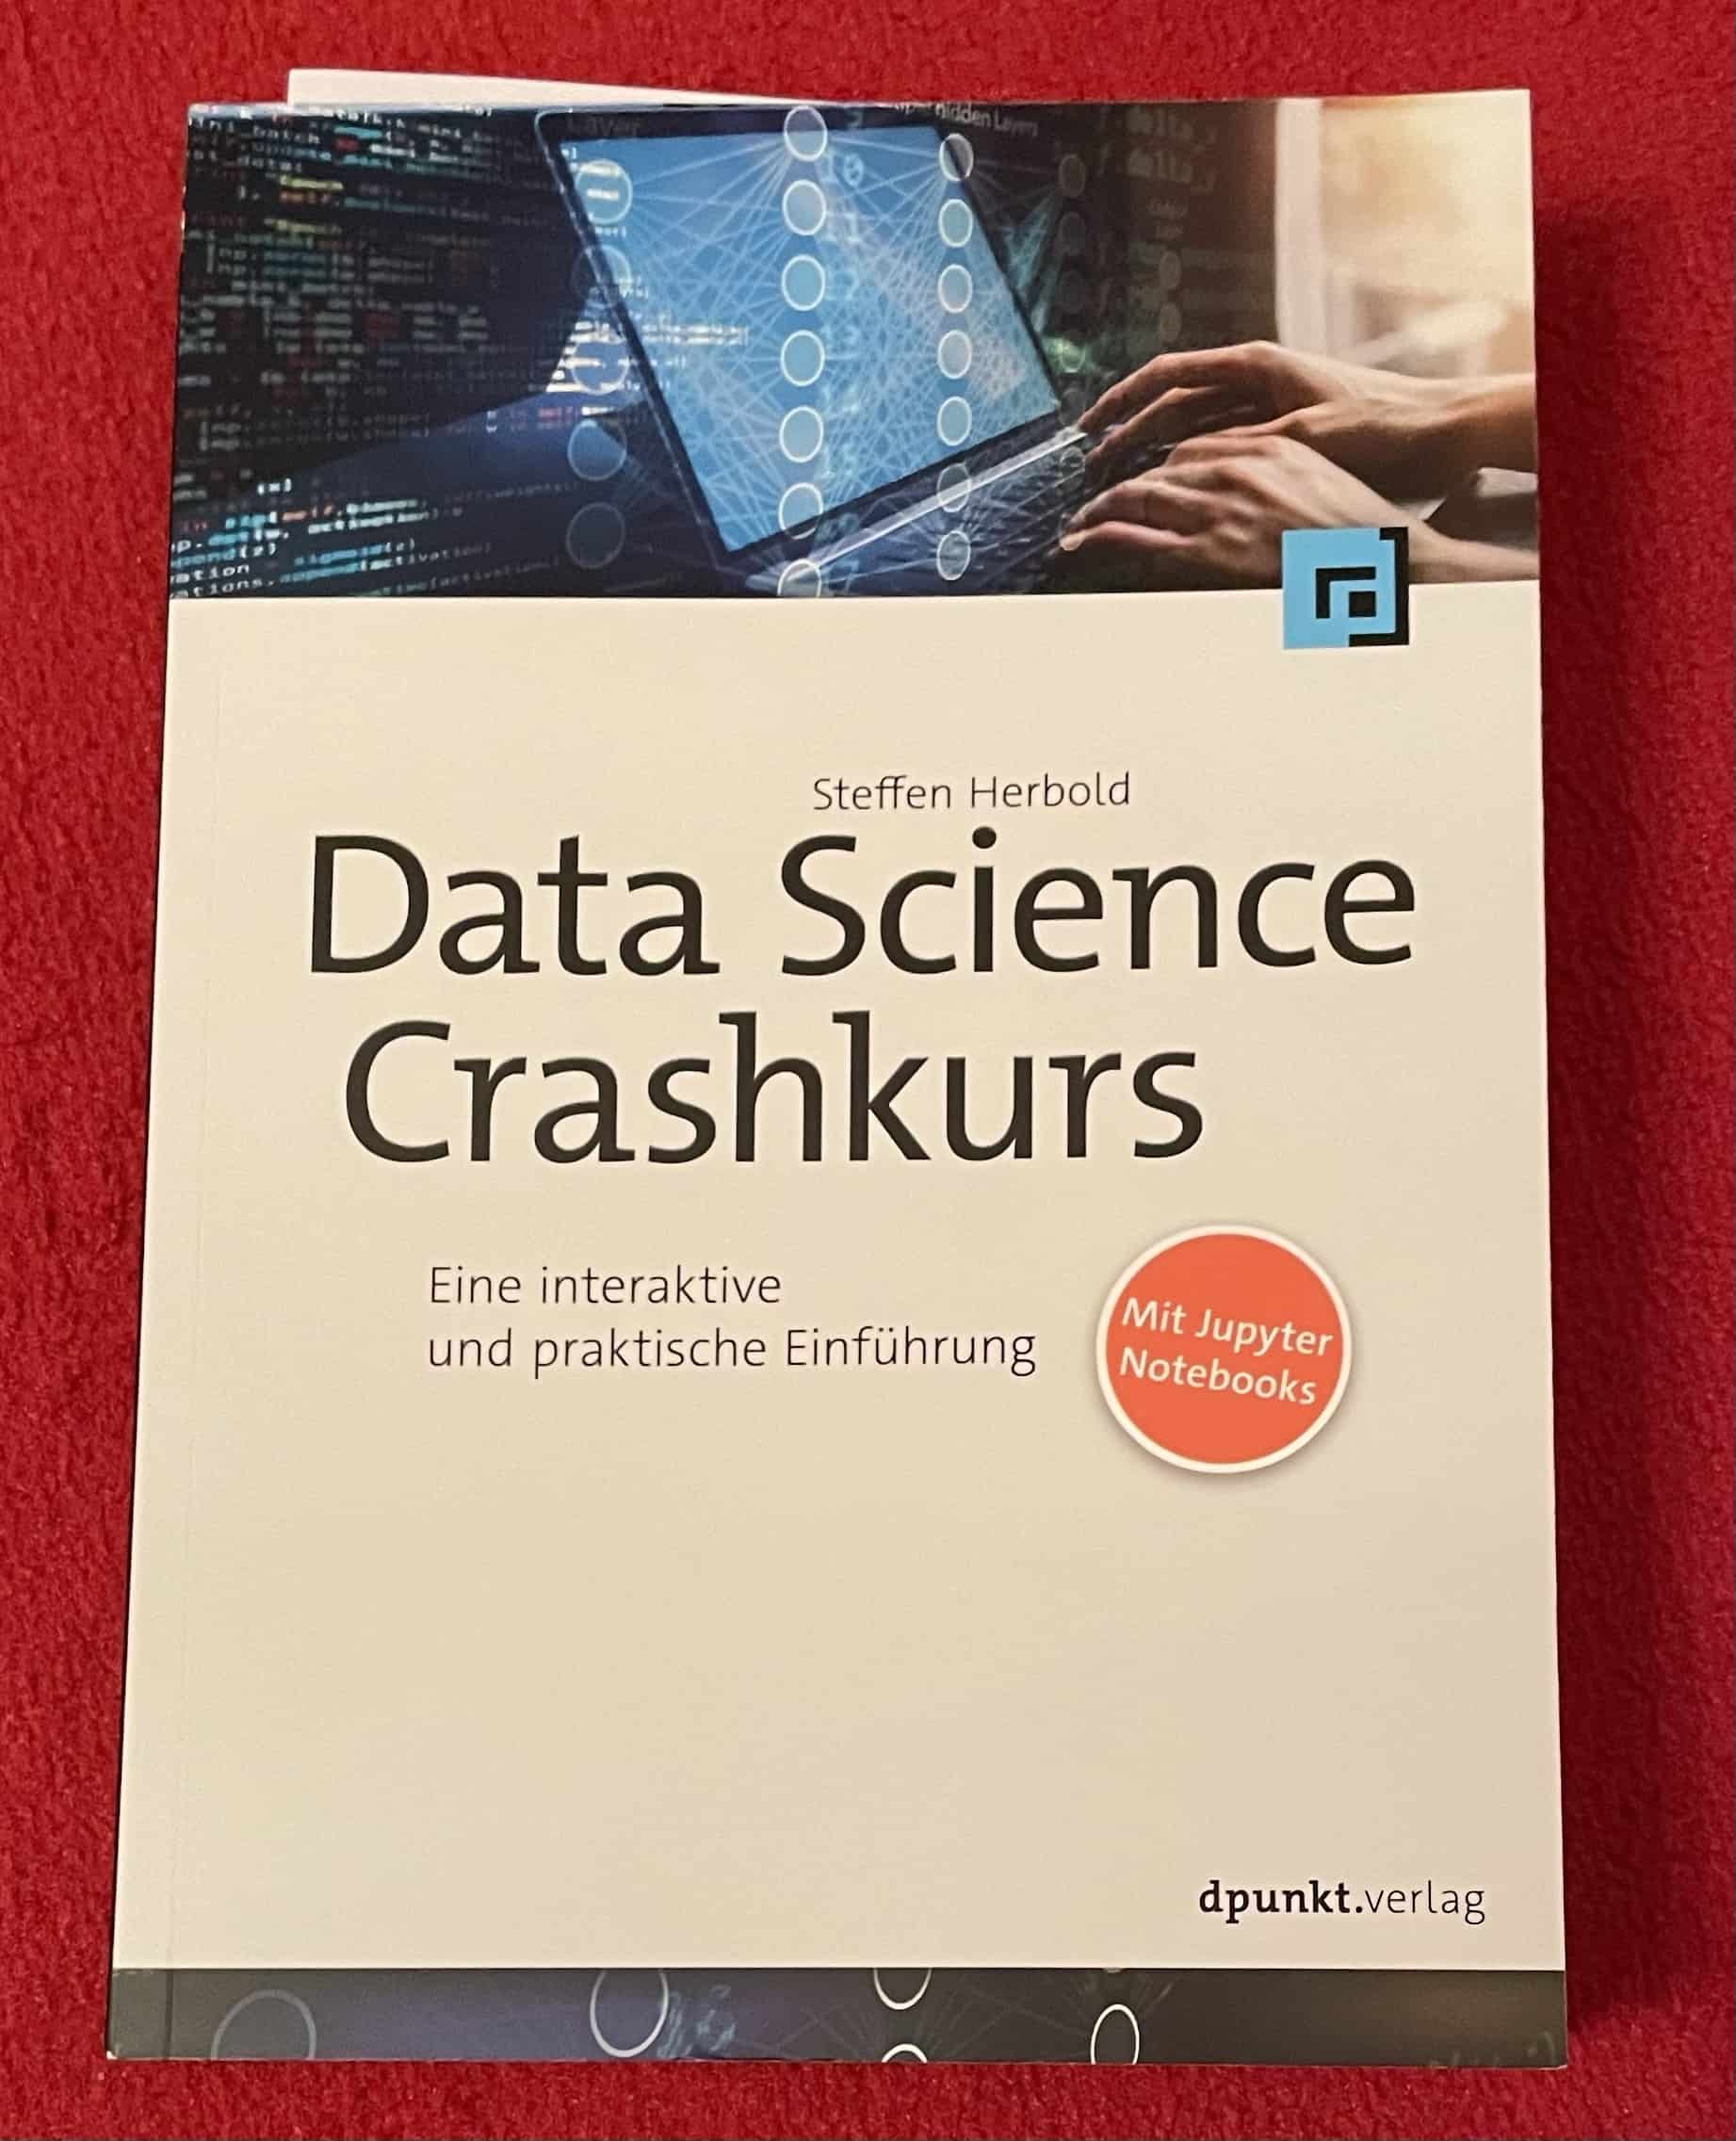 dpunkt-Buch Data Science Crashkurs